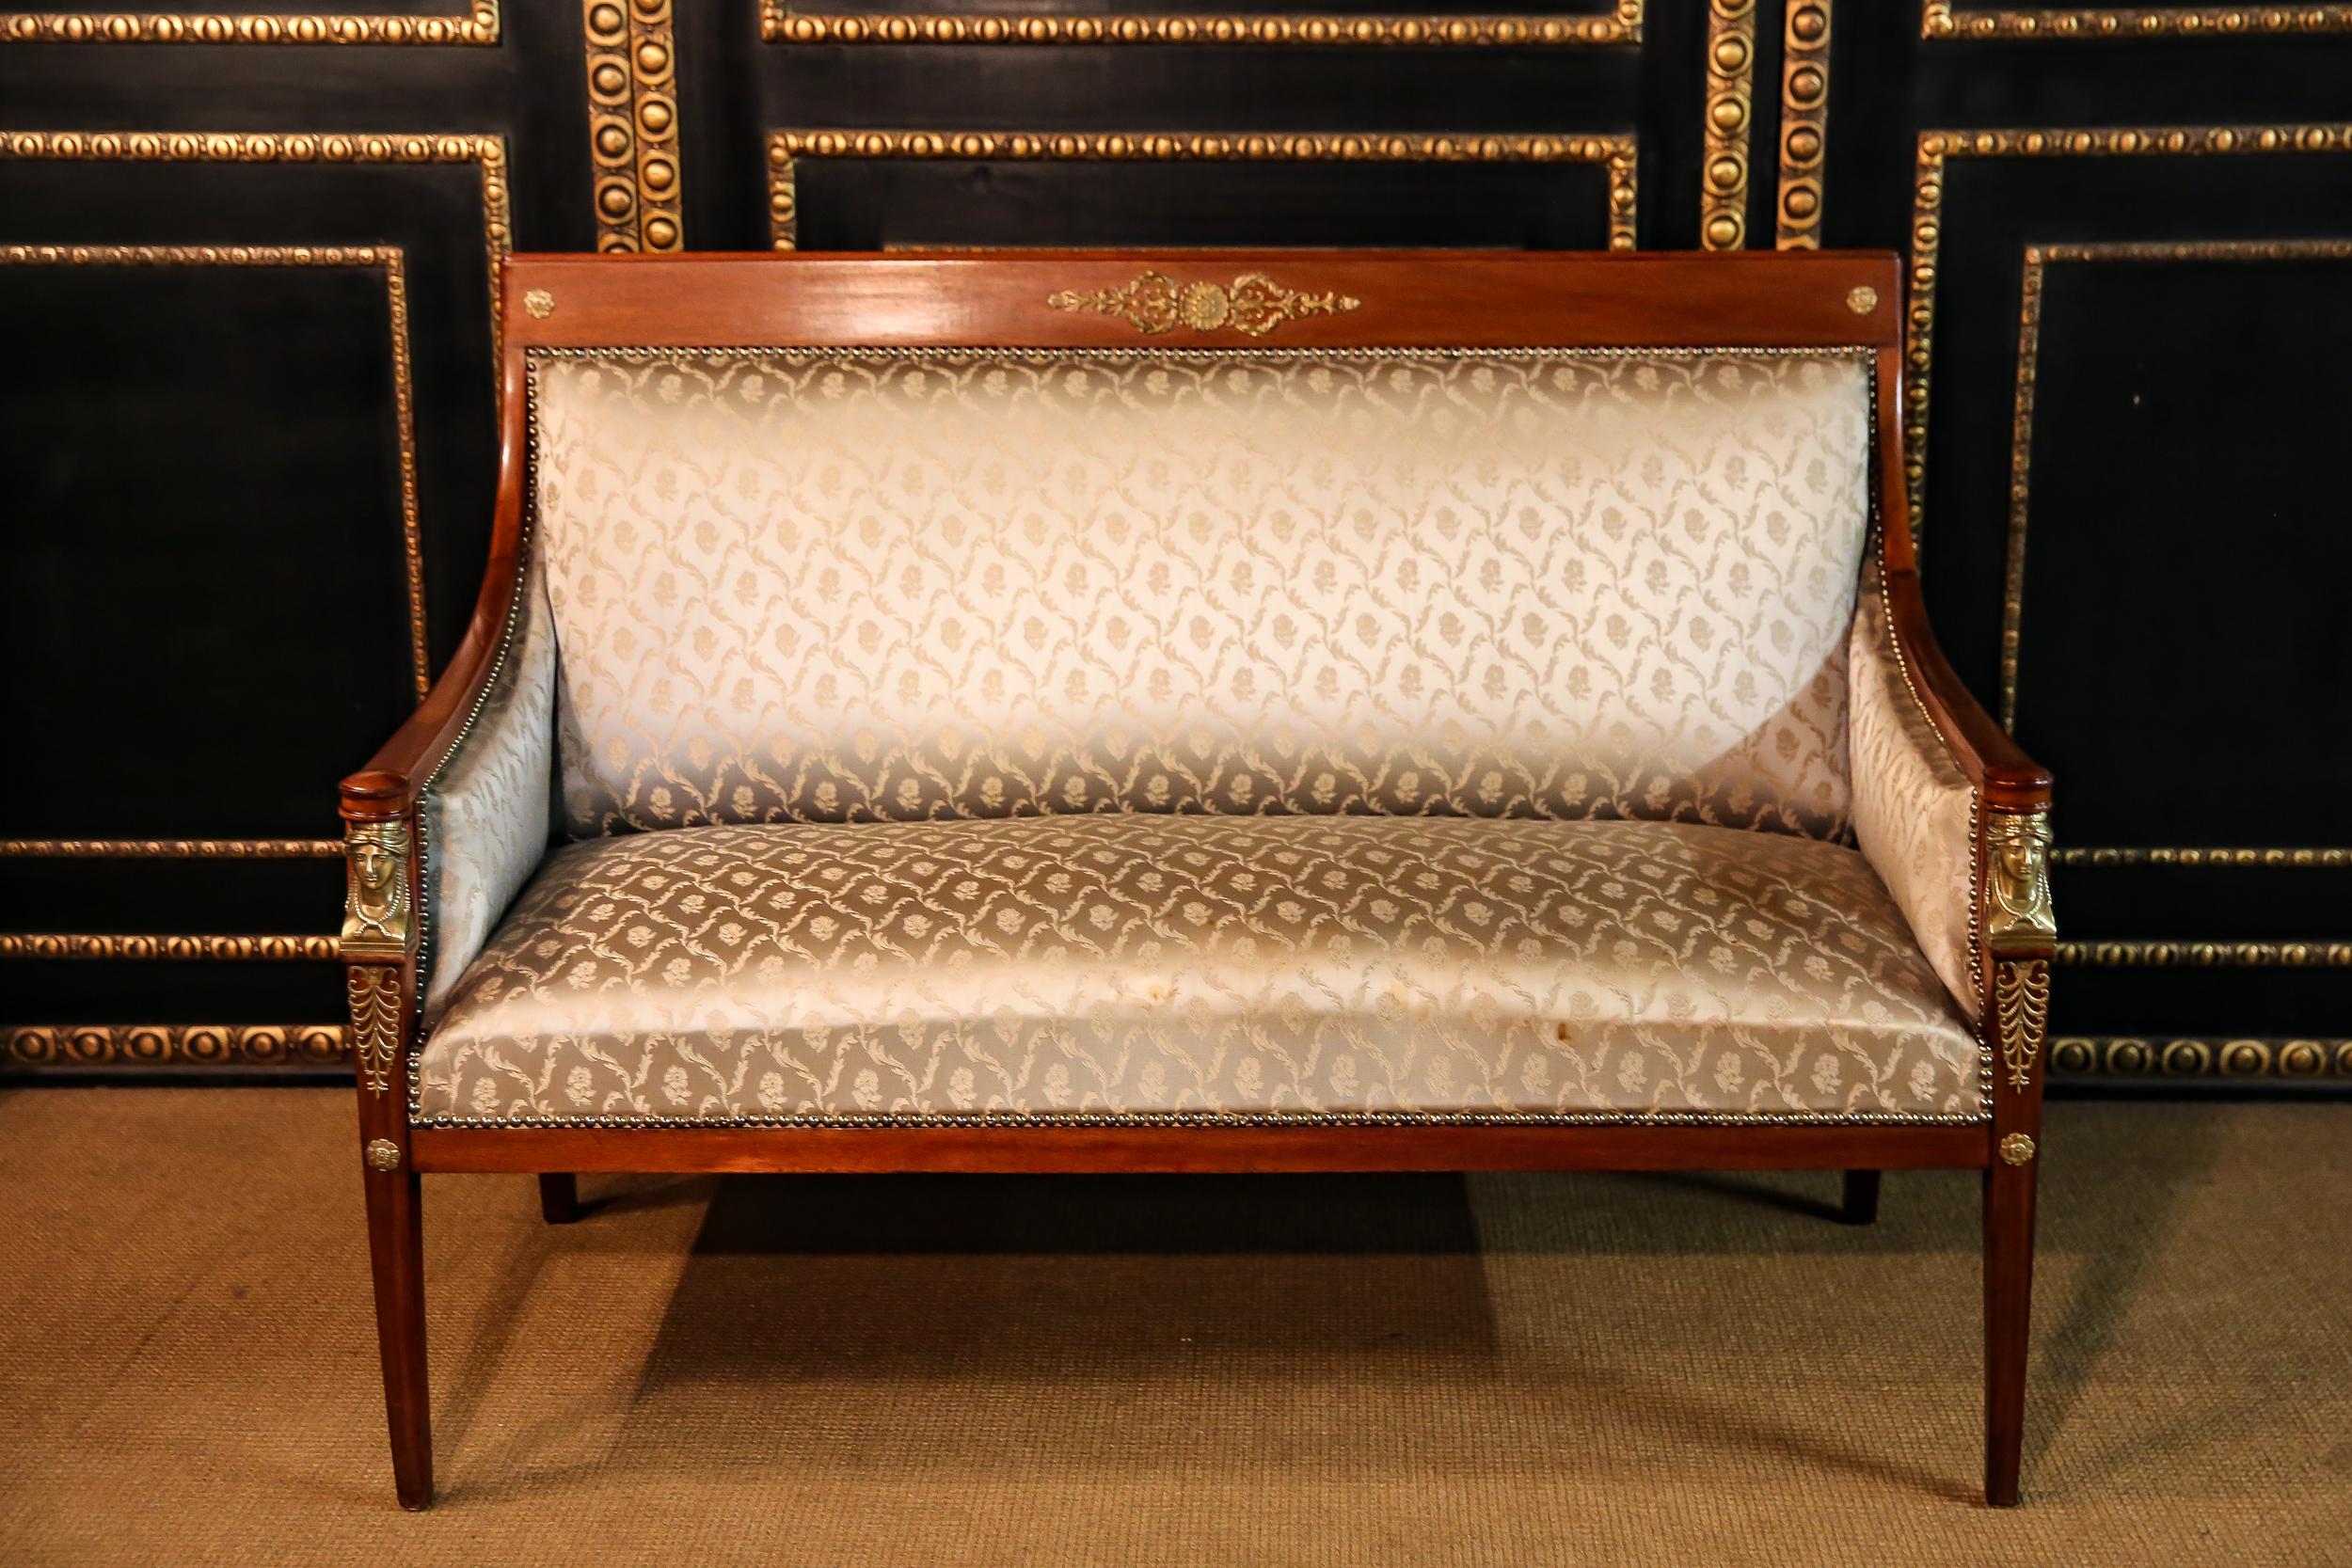 Original Empire Sofa circa 1860-1870 from an Empire Room 5